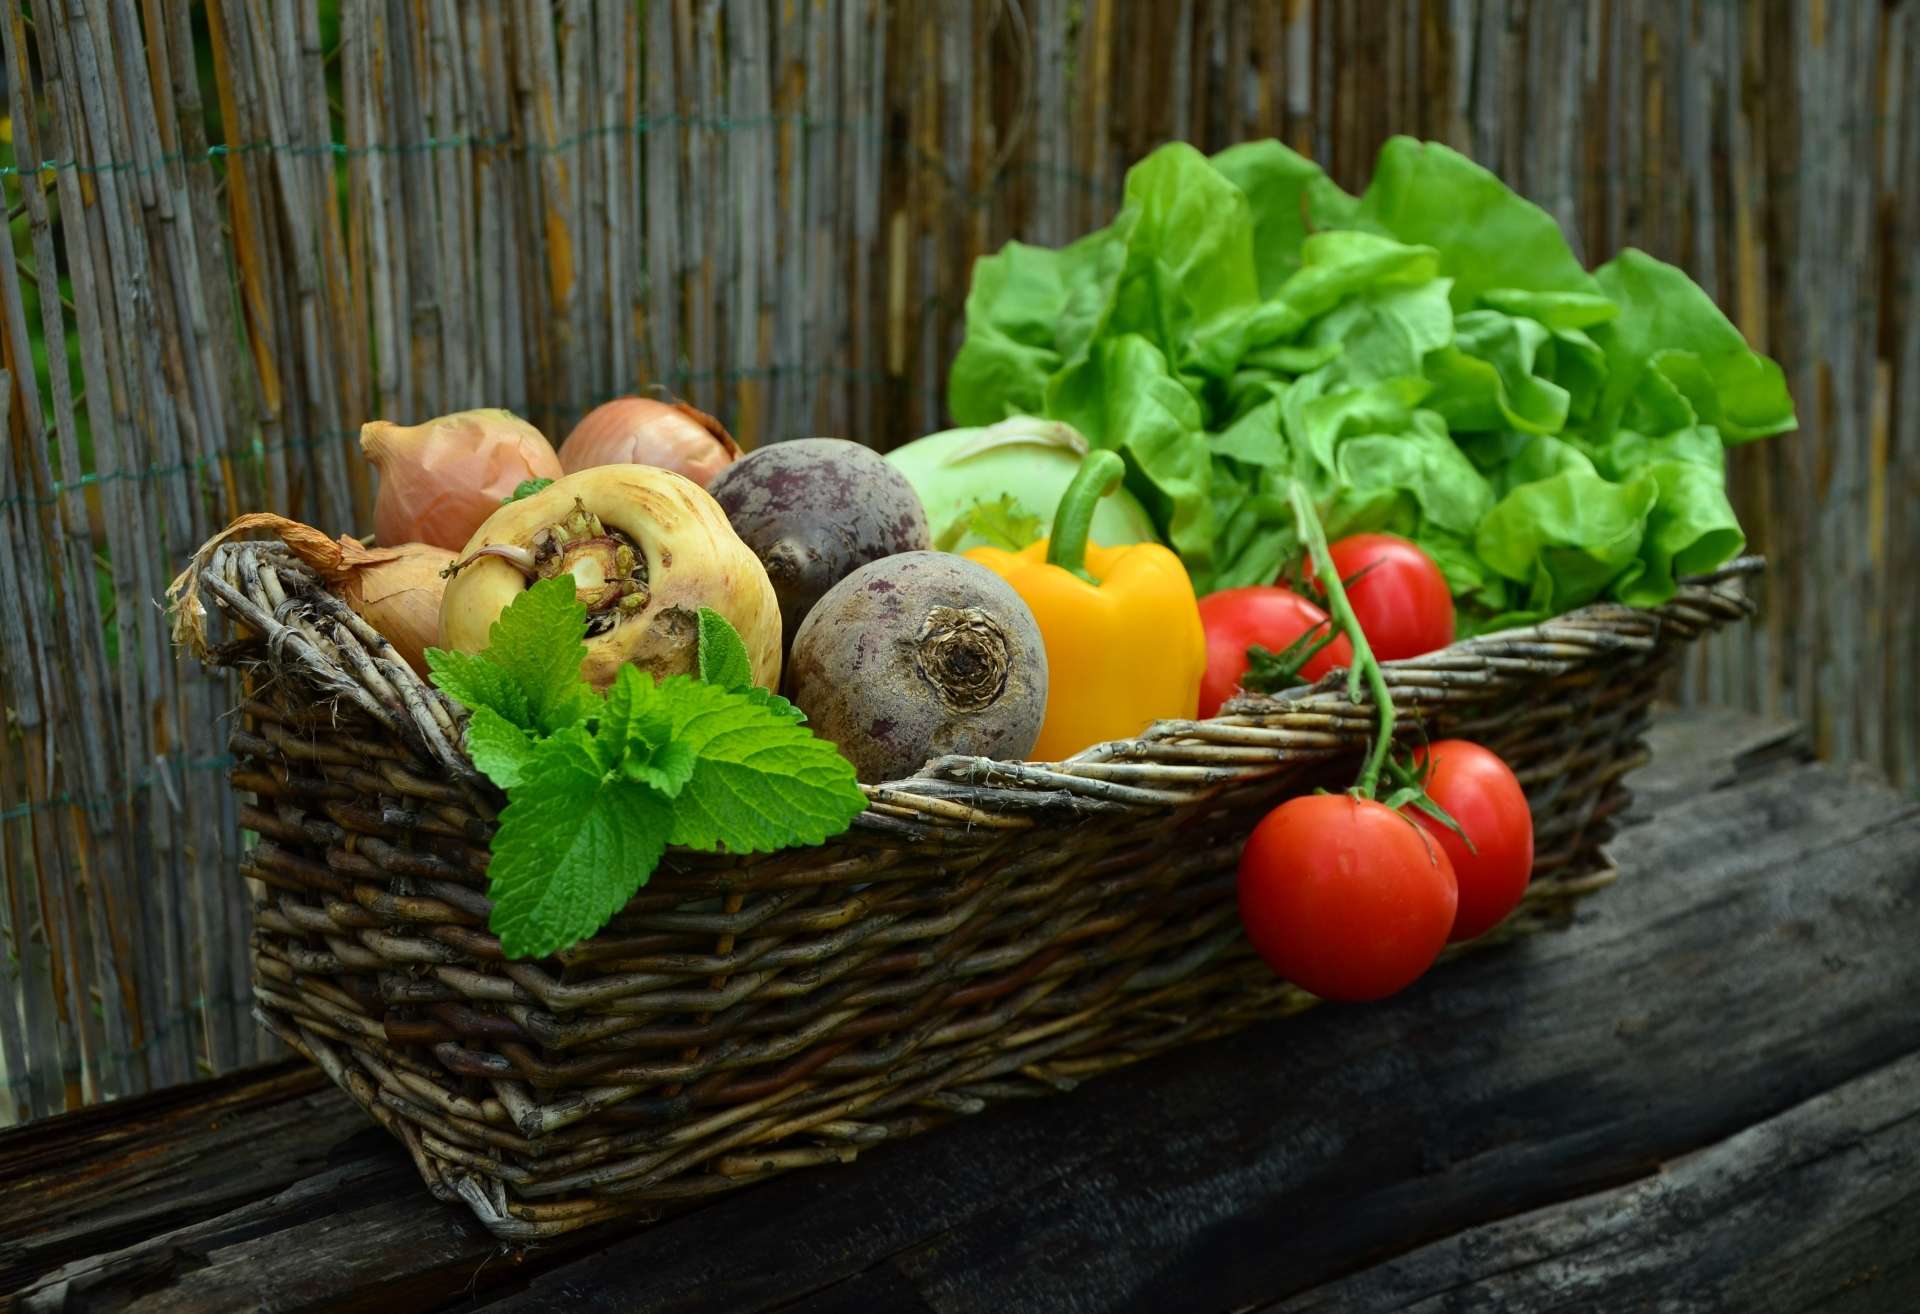 fruits_legumes.potager_vieille_poste_-_credit_photo_congerdesign_-_pixabay-1.jpg